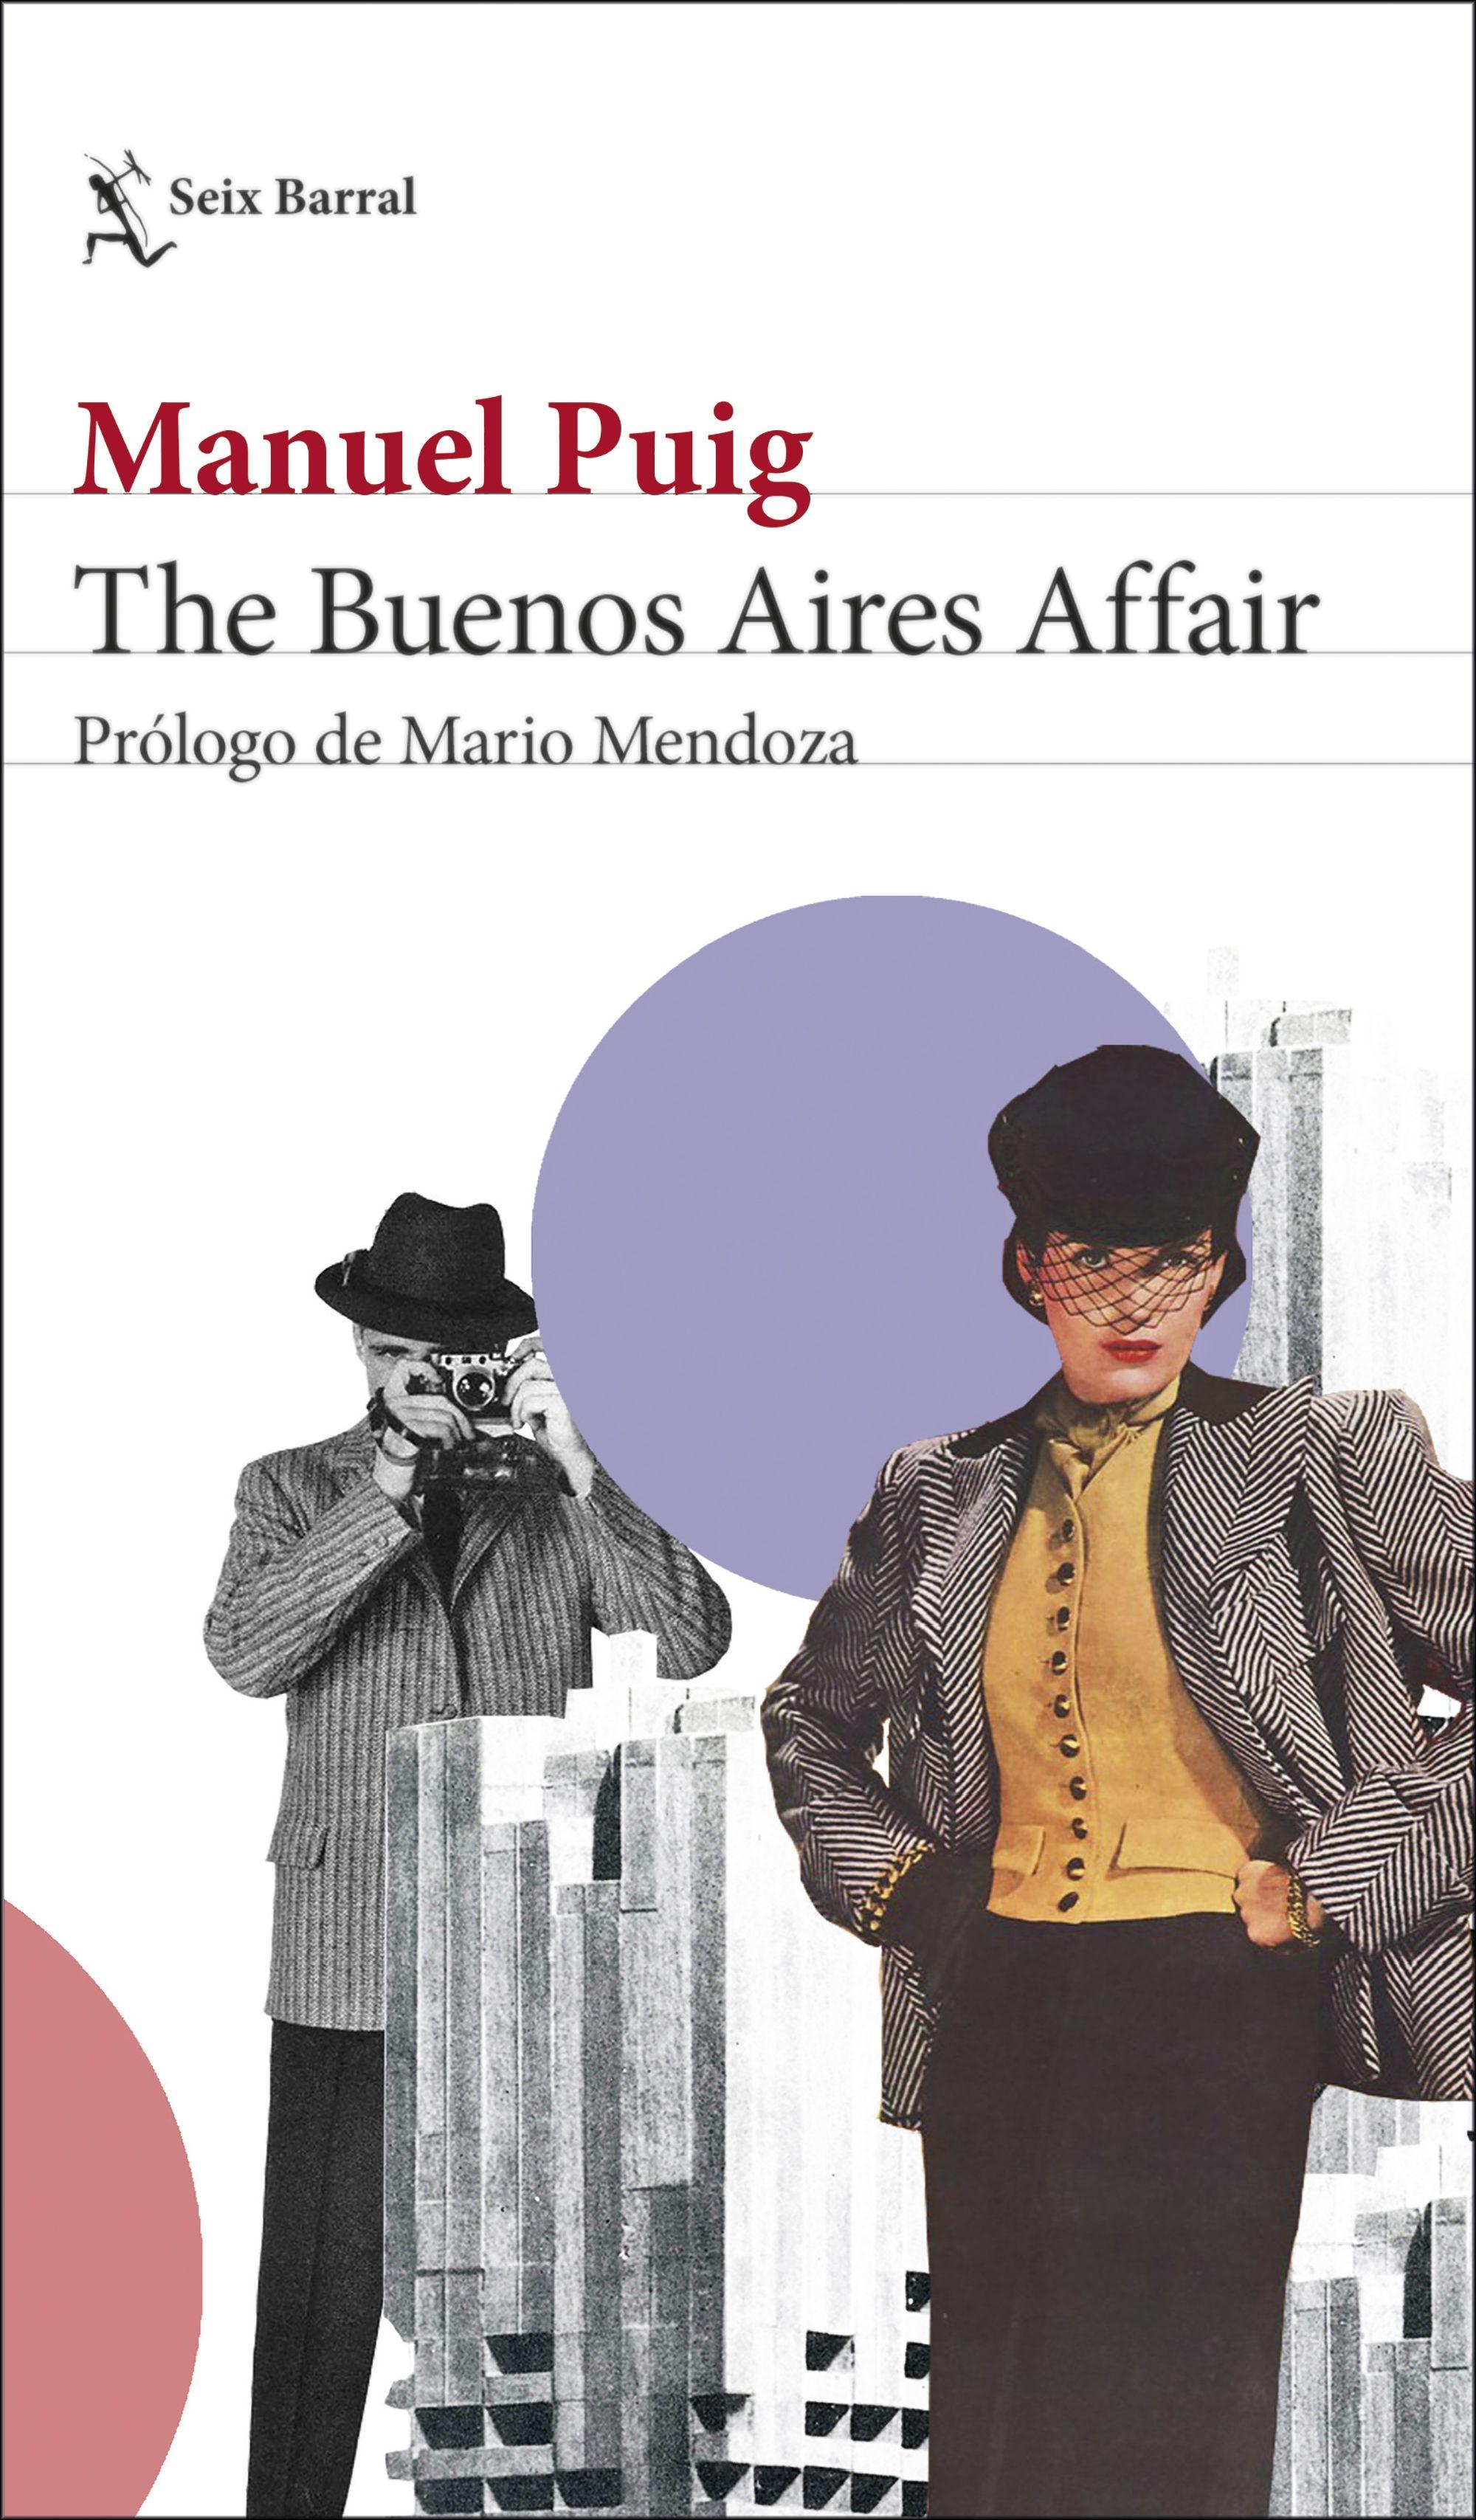 The Buenos Aires Affair "Prólogo de Mario Mendoza". 